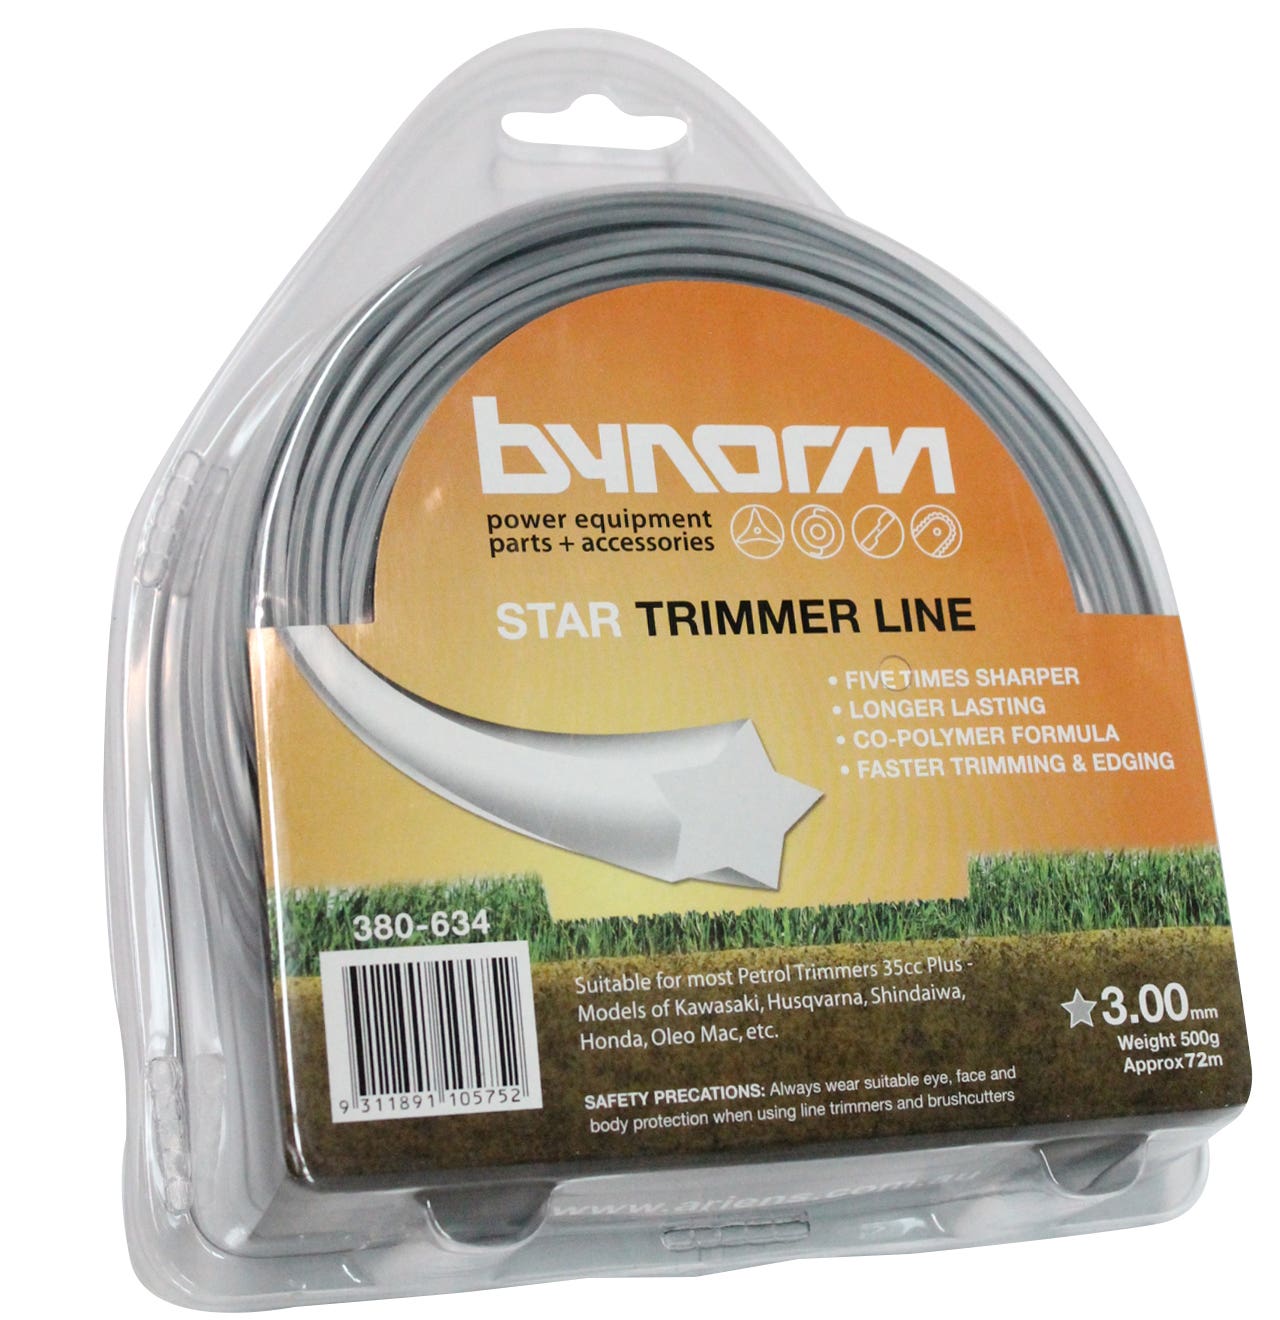 Bynorm Star Trimmer Line Grey 3.0mm 500g